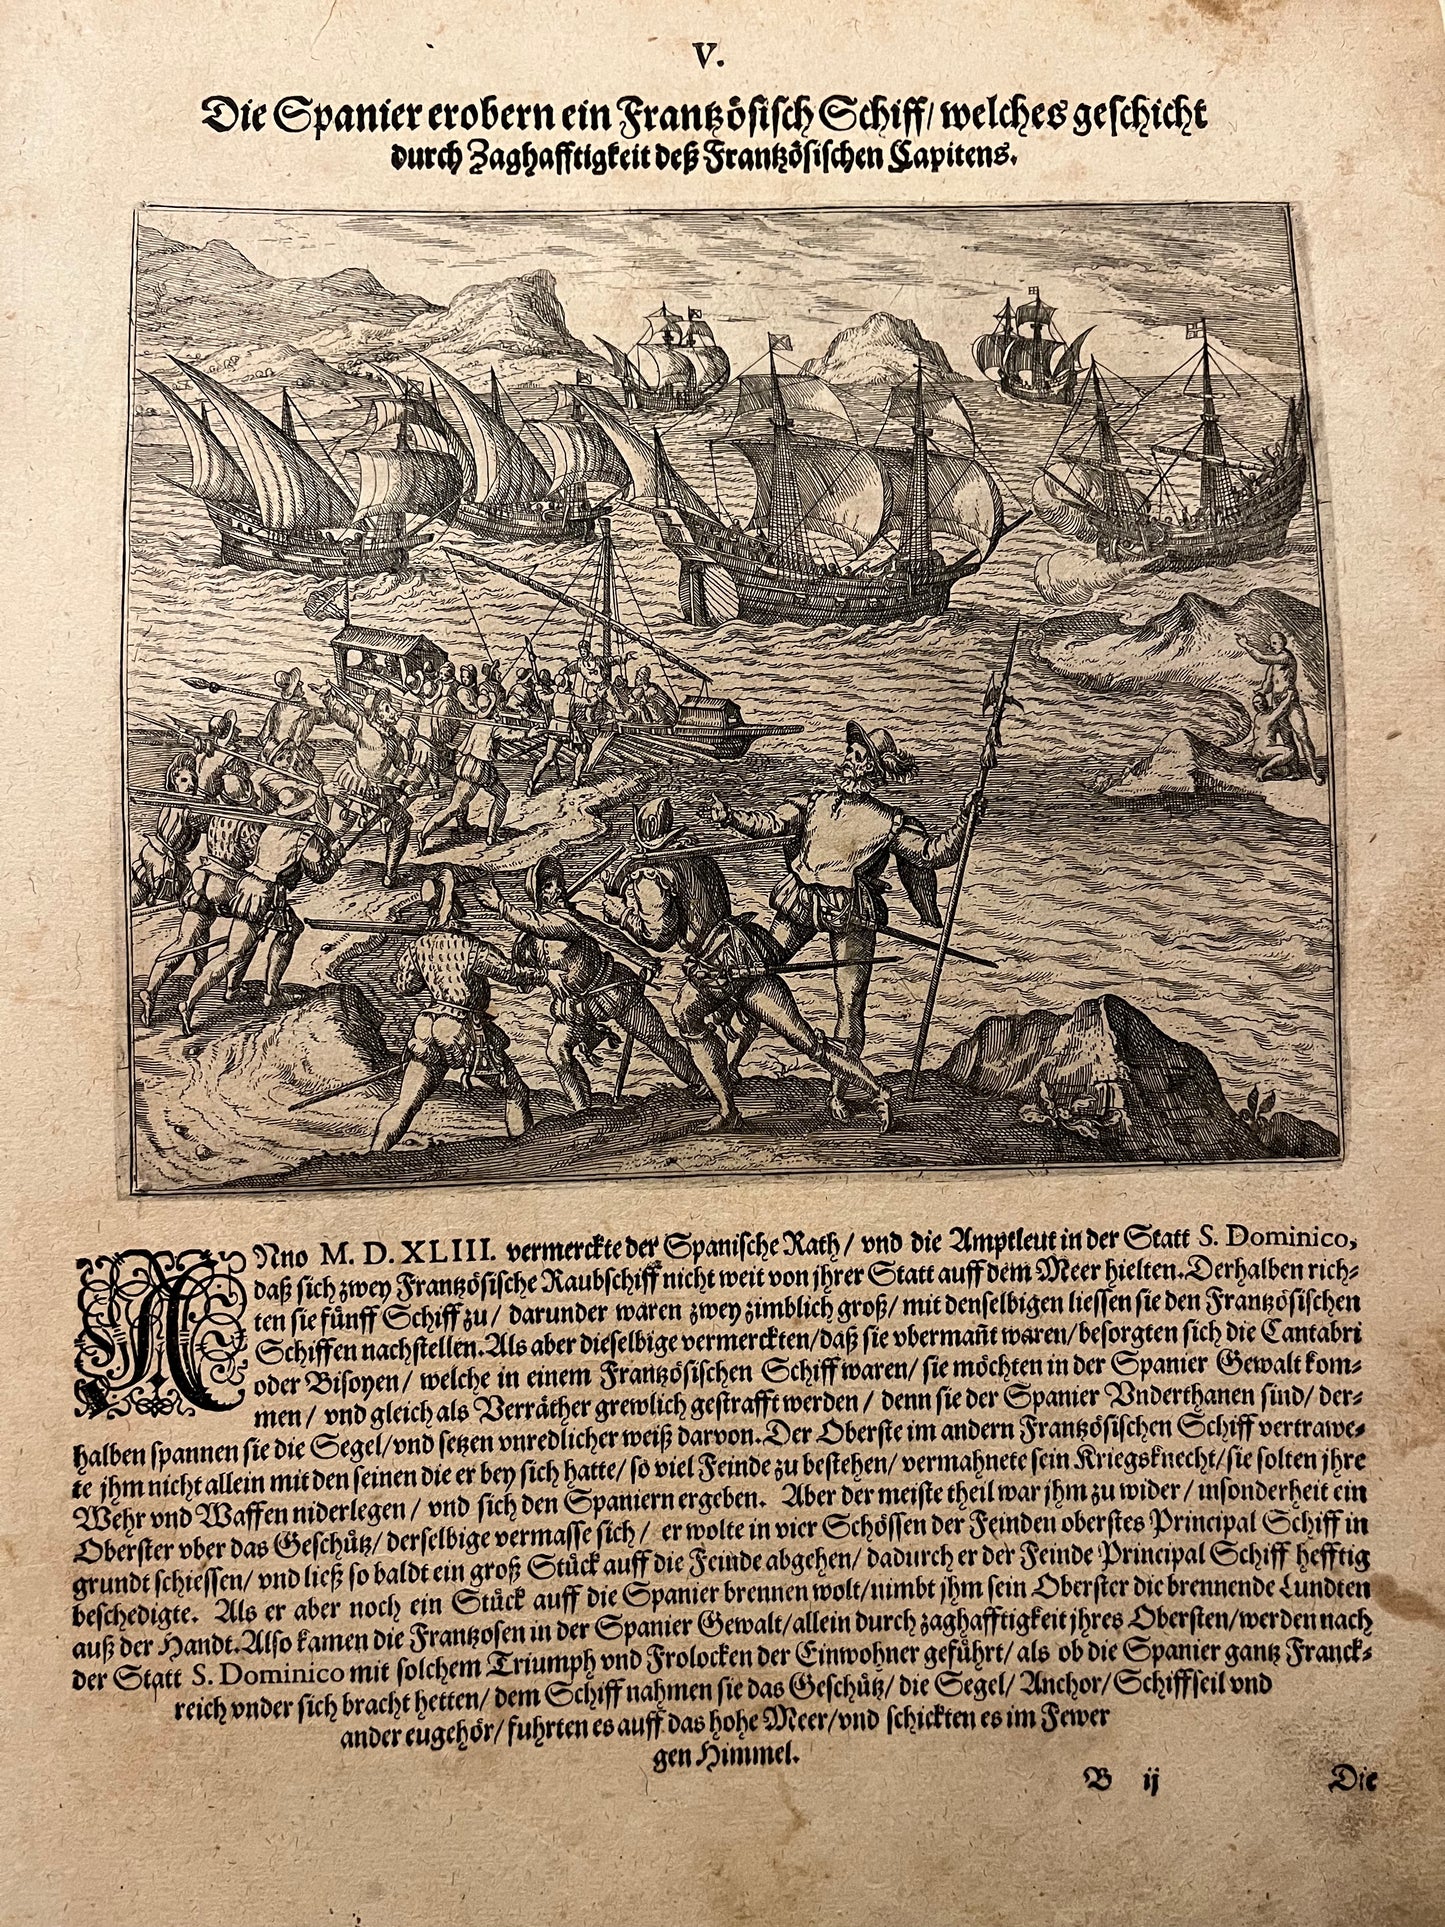 "The Spanish capture a French ship off the coast of Santo Domingo" - De Bry - 1594